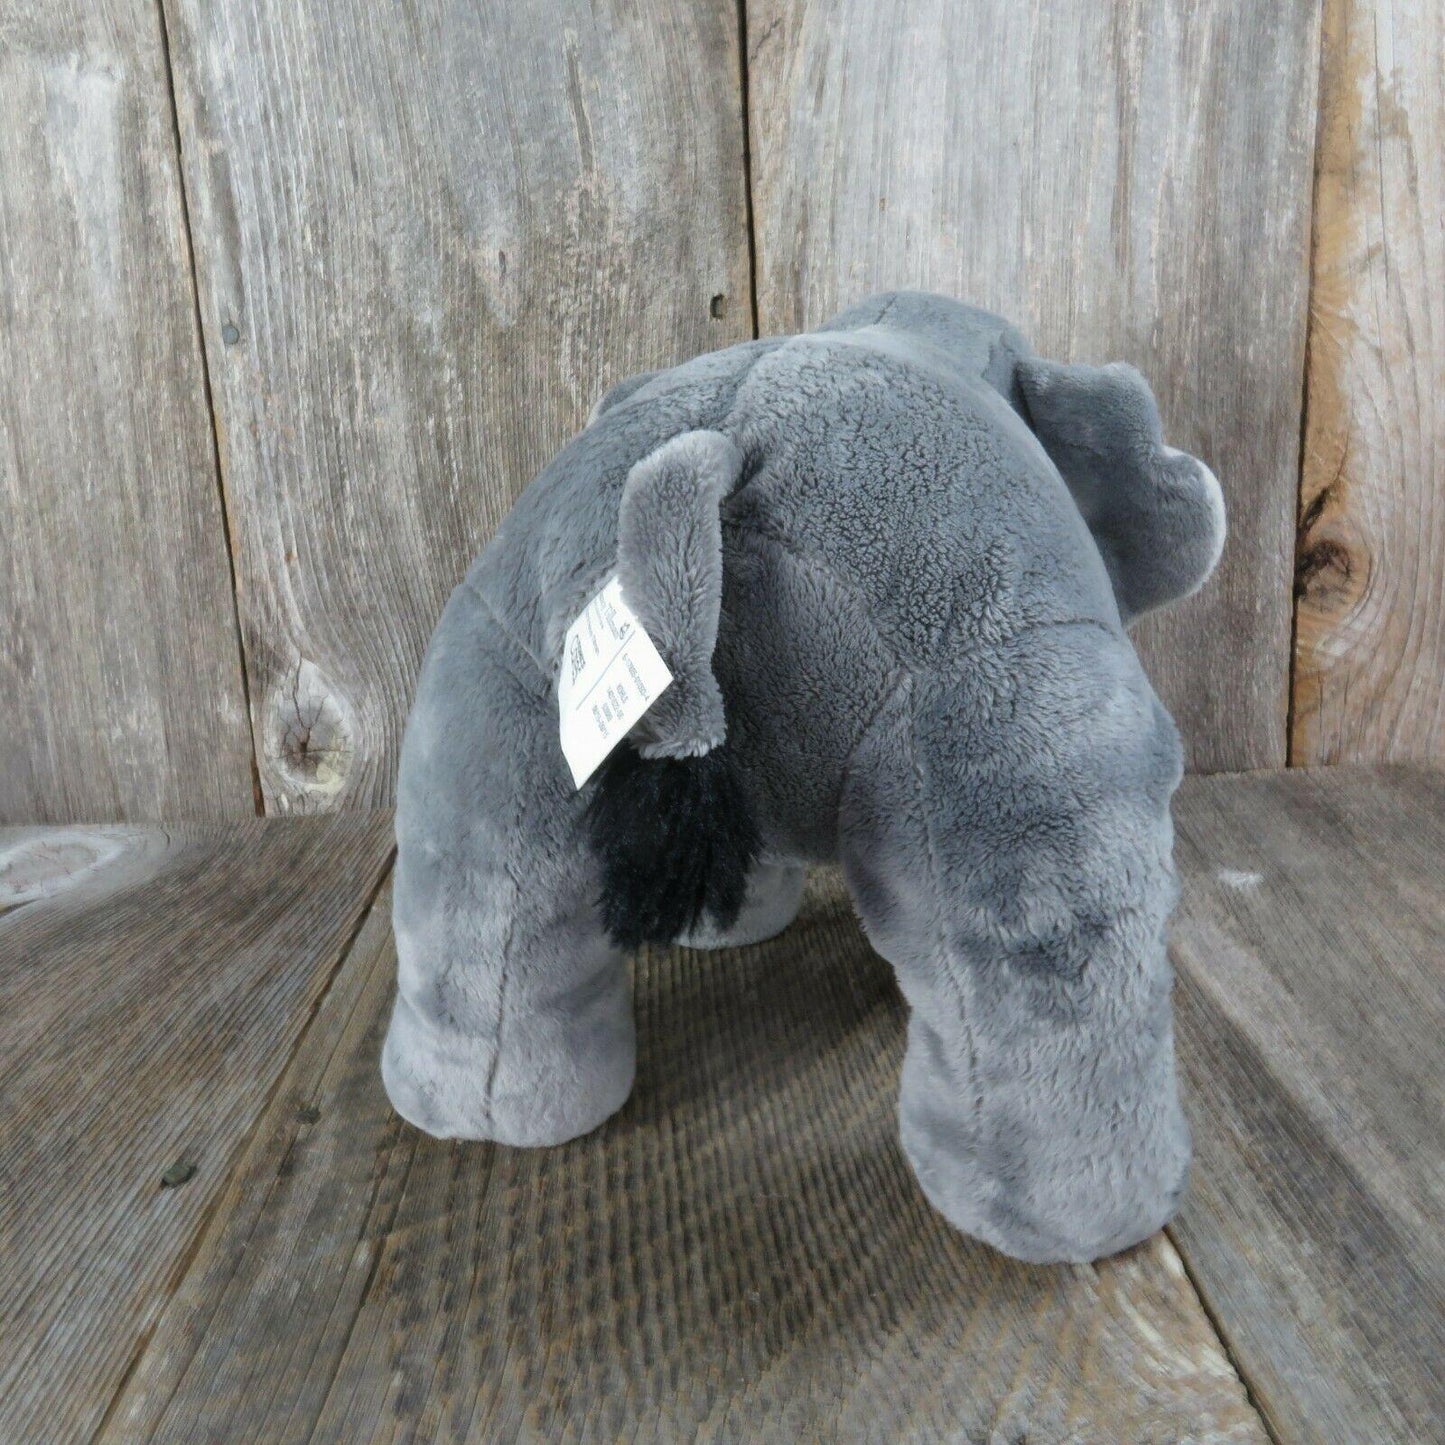 Elephant Kohl's Cares Plush Nancy Tillman Collection Stuffed Animal Toy 2015